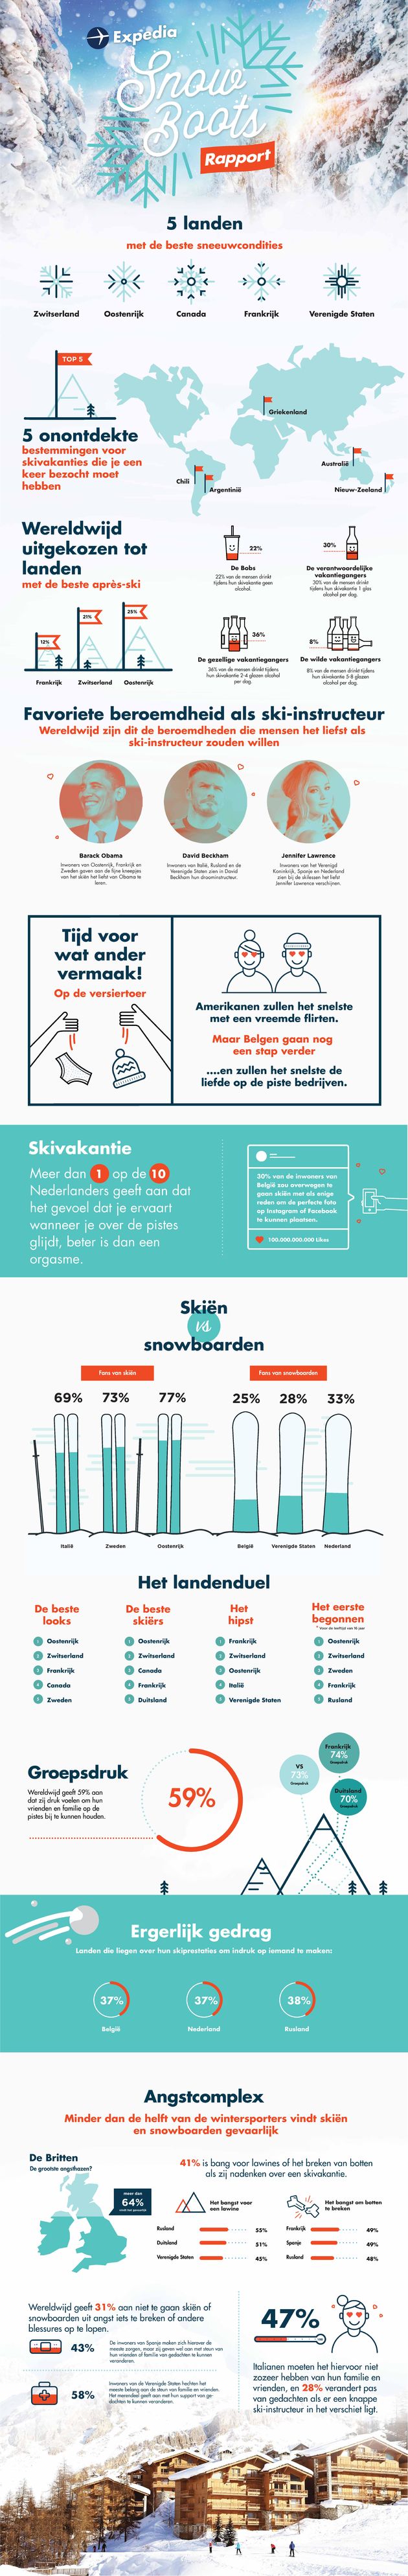 Snowboots_Infographic